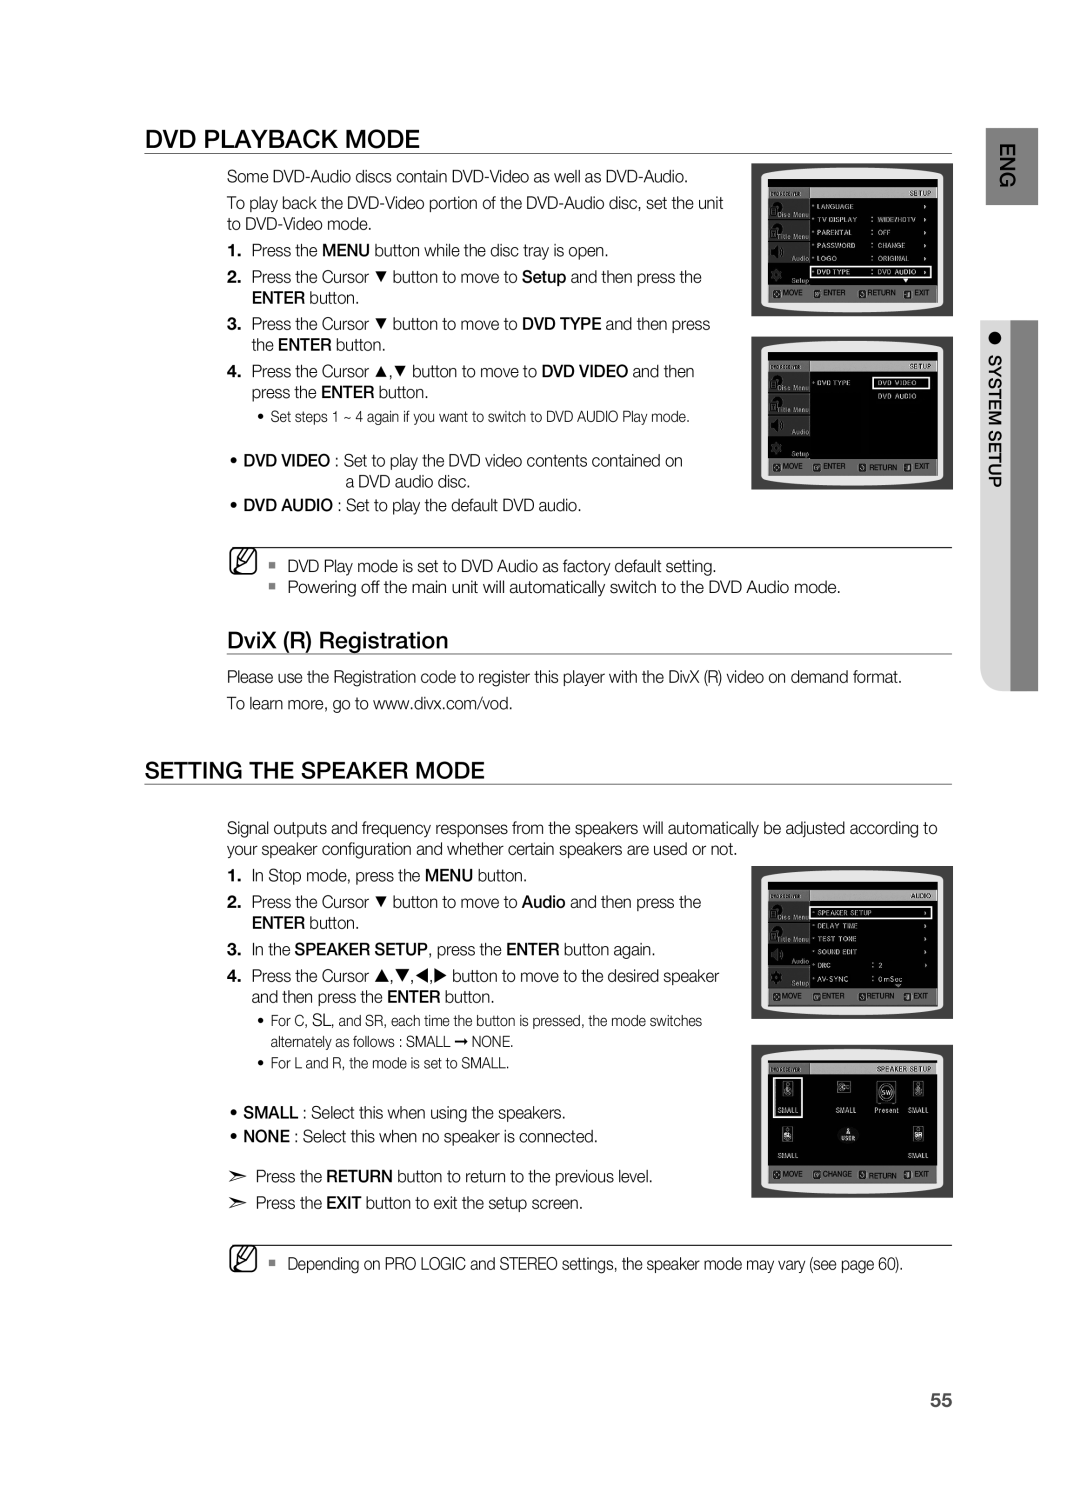 Samsung HT-TWZ315 manual DVD Playback Mode, DviX R Registration, Setting the Speaker Mode 